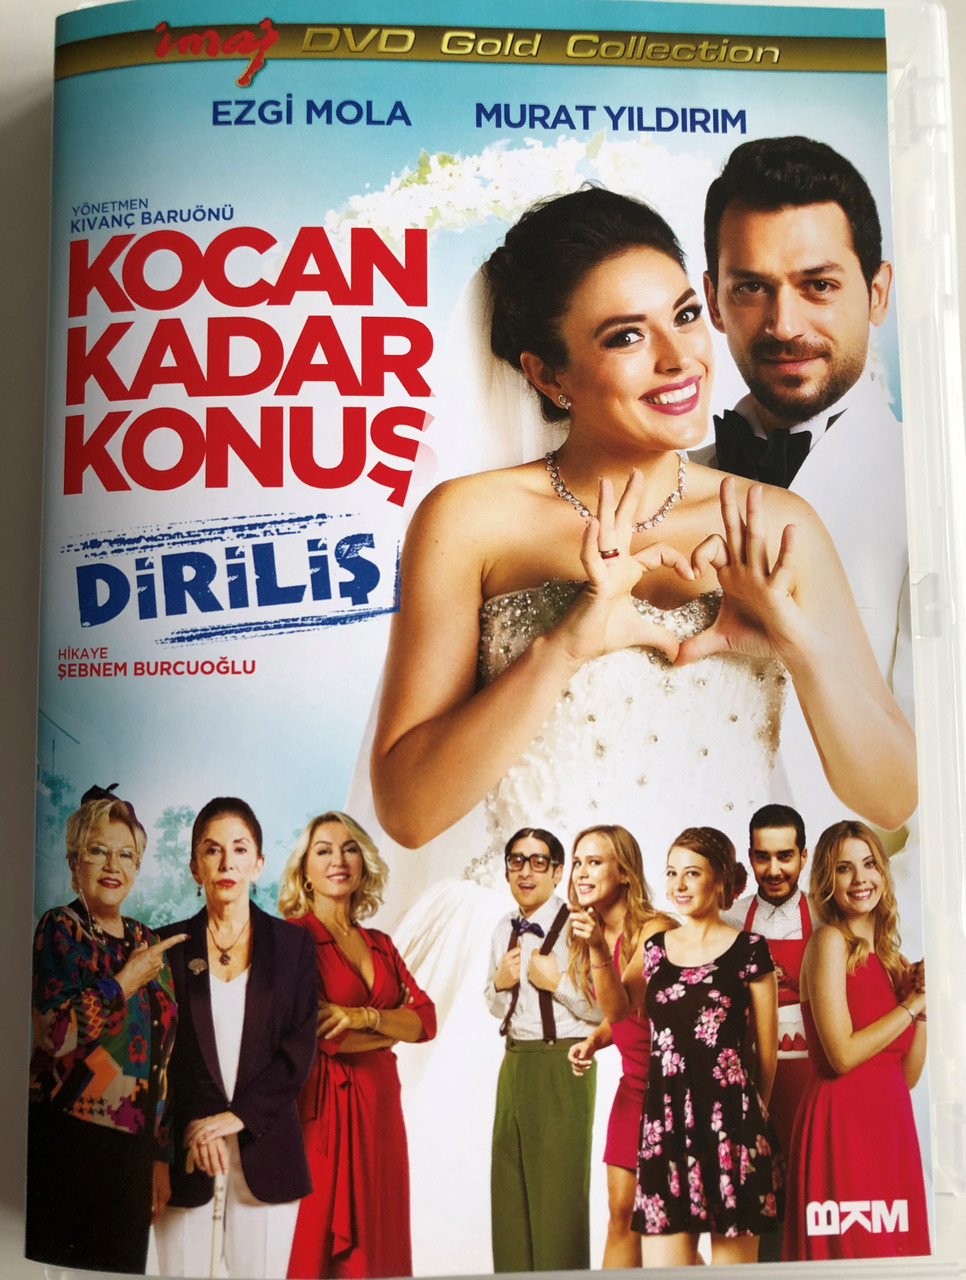 kocan kadar konus dirilis dvd 2015 husband factor directed by kivanc baruonu starring ezgi mola murat yildirim bibleinmylanguage